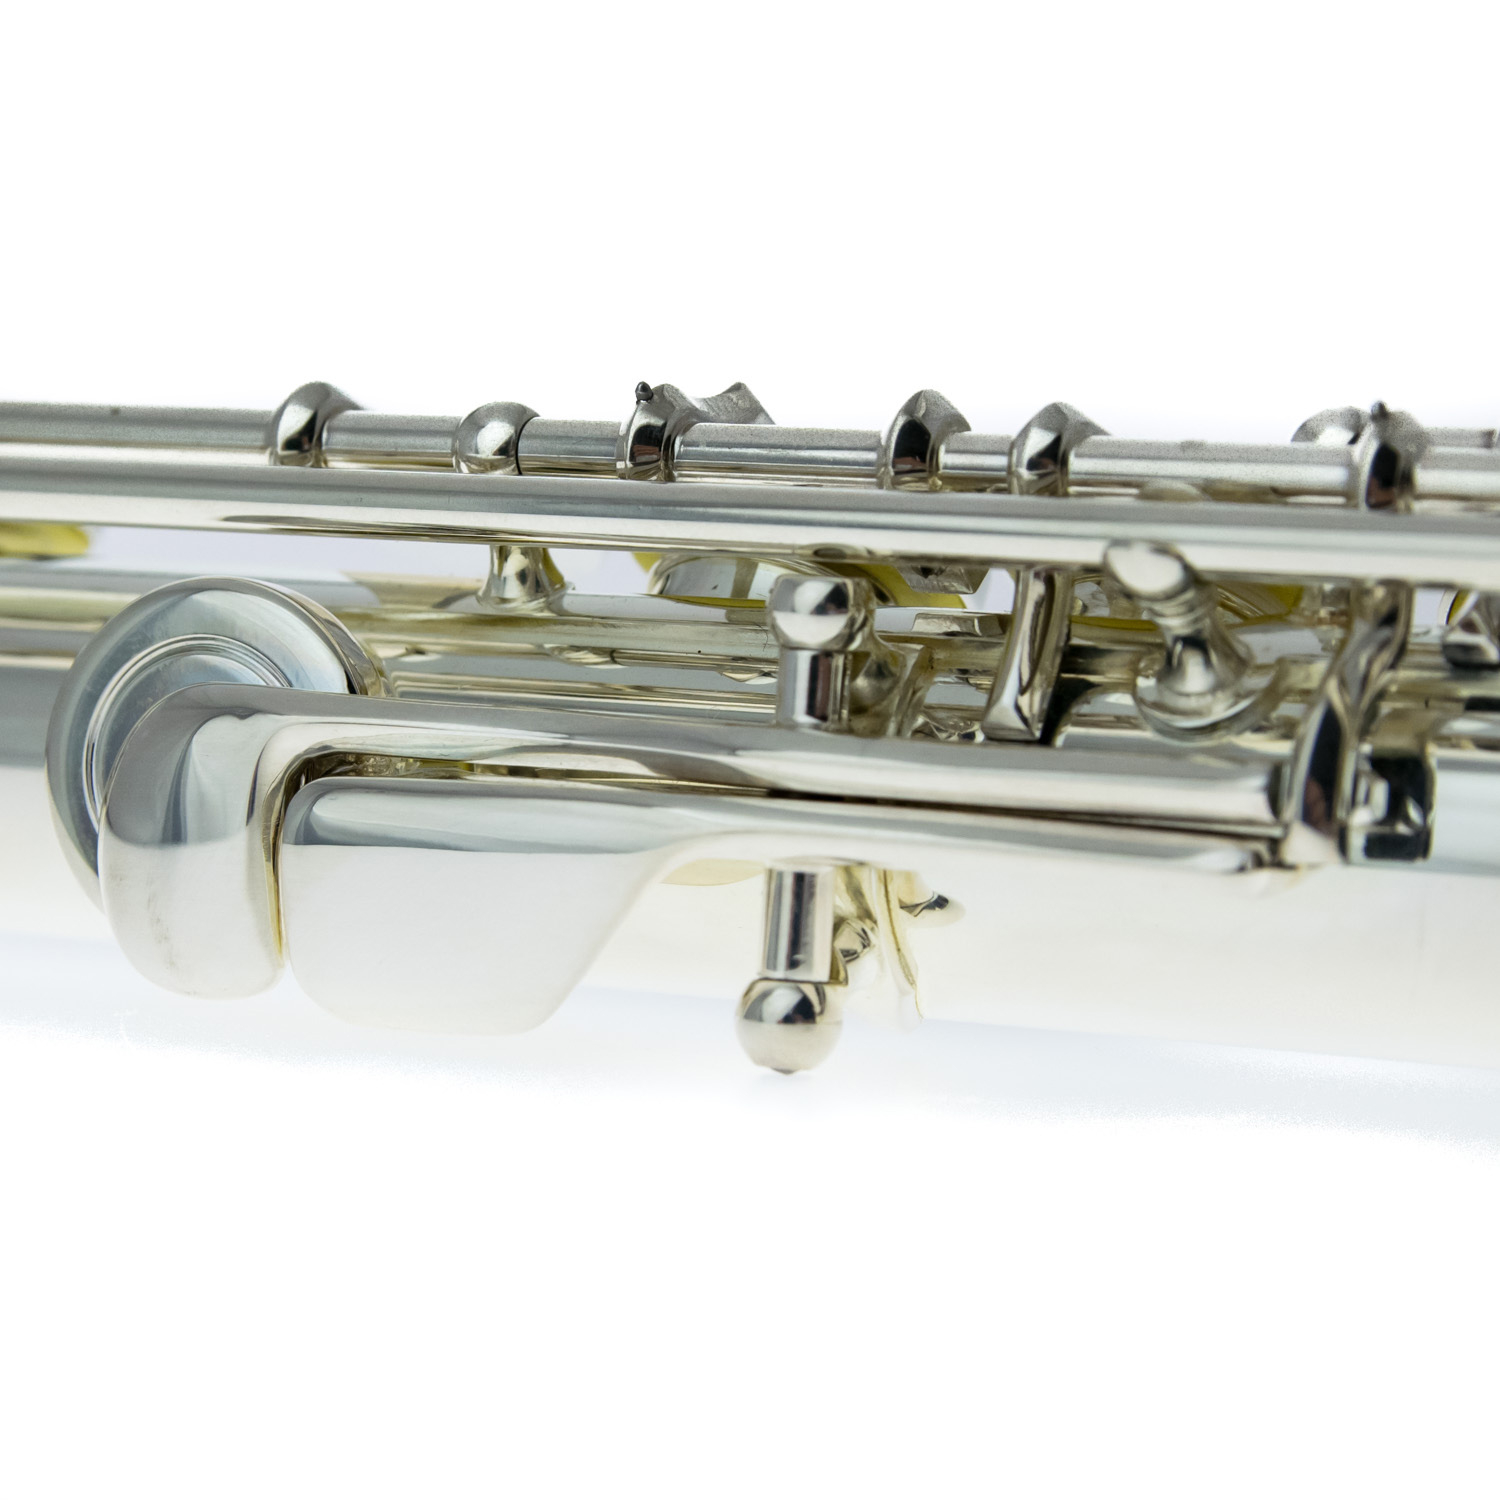 Haynes Flute - Amadeus AF-780 RCEO